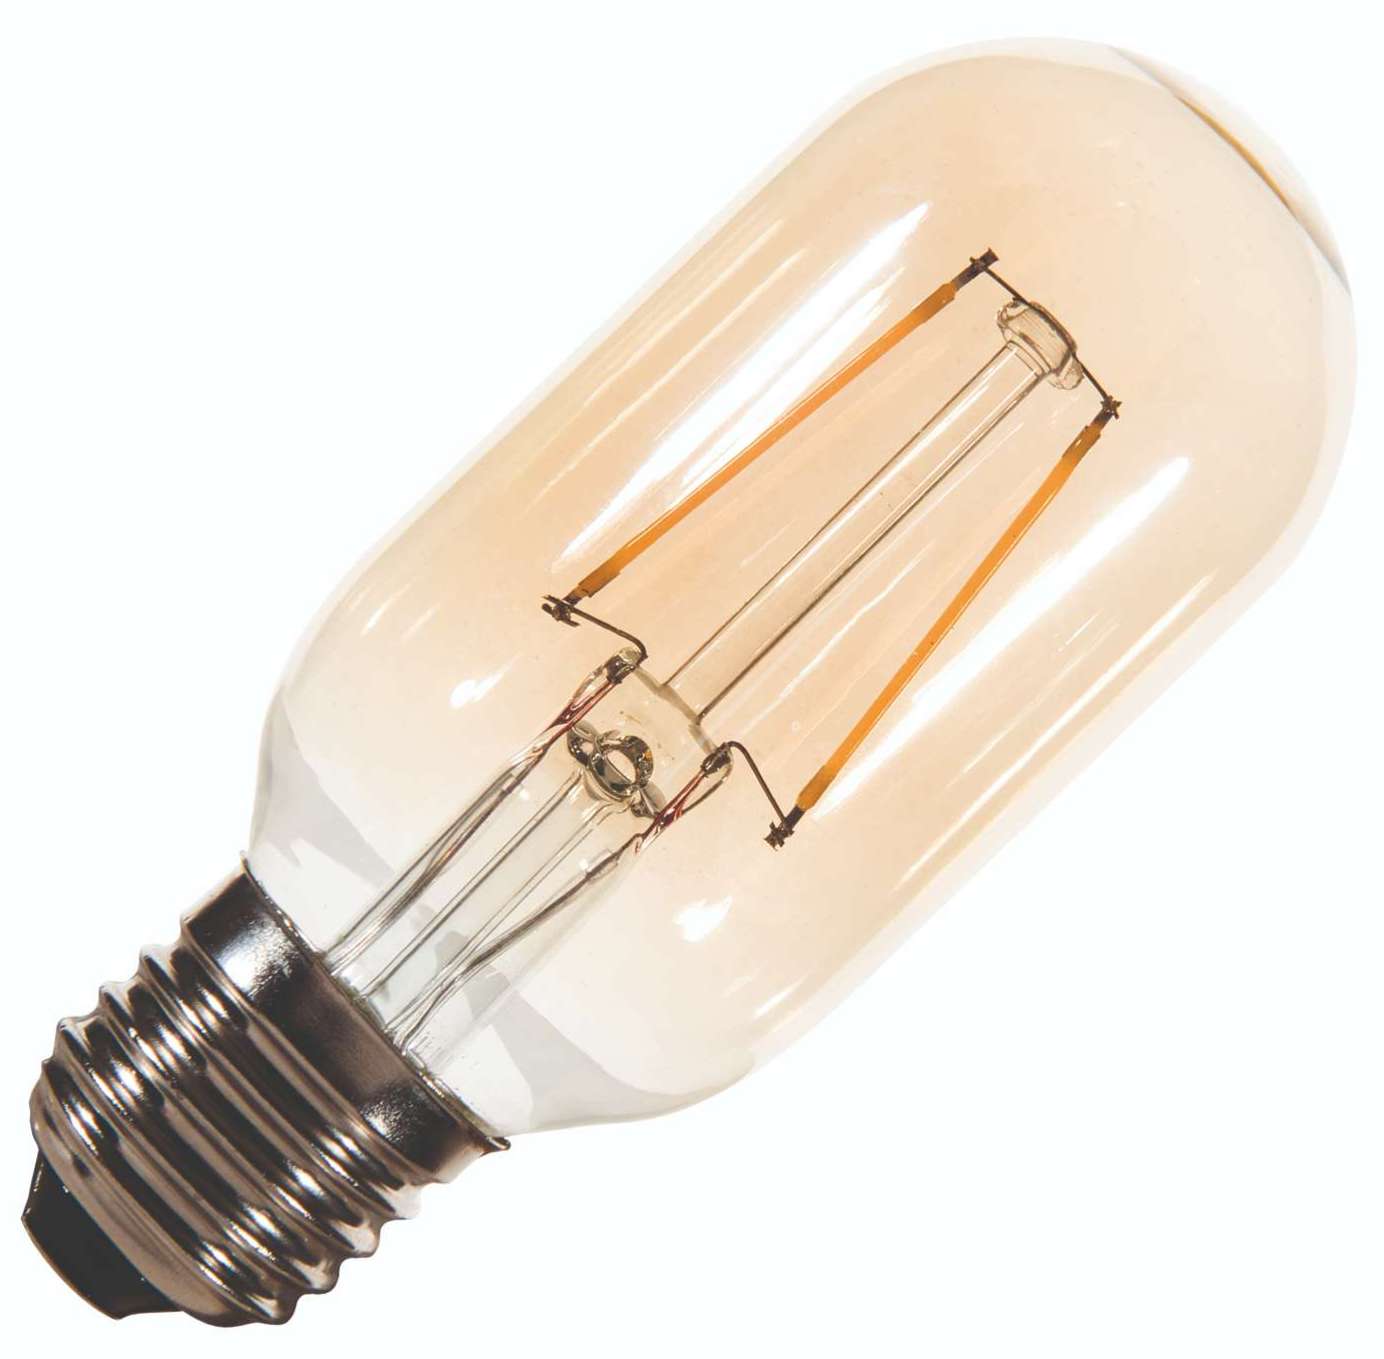 Bailey | LED Buislamp | Grote fitting E27  | 2W